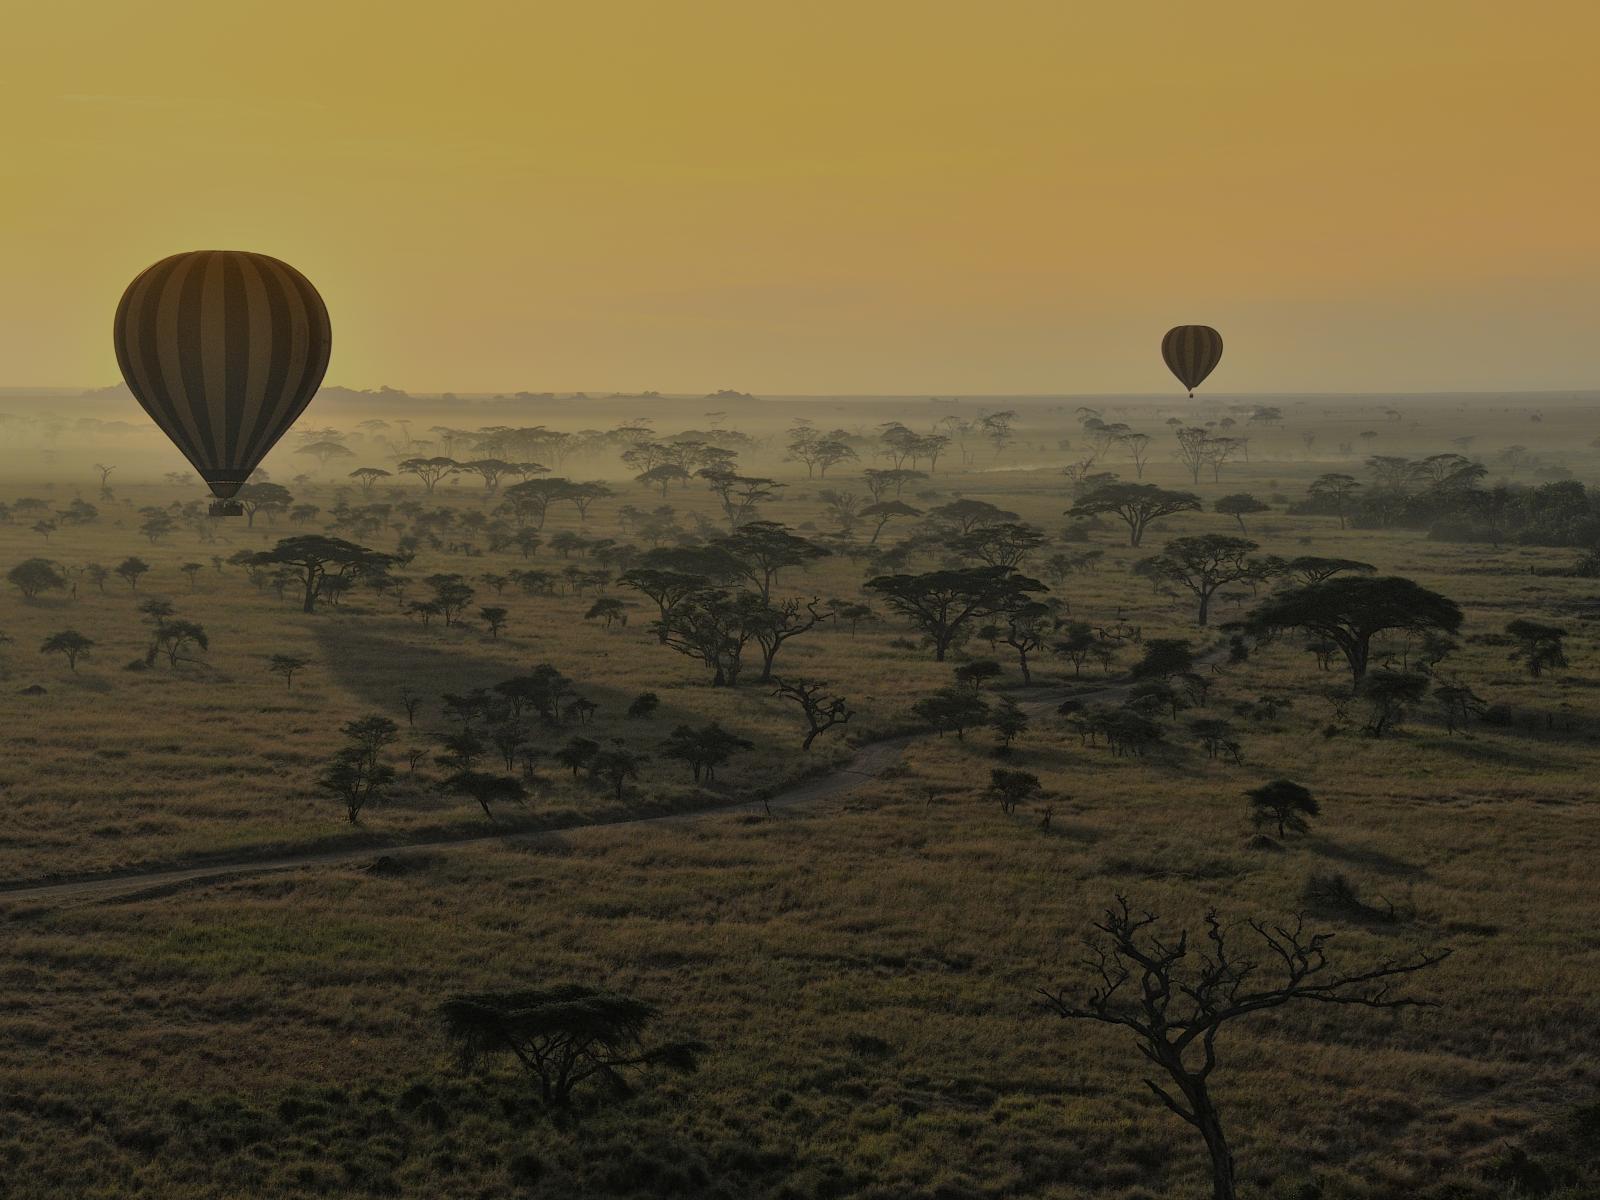 Hot Air Ballons, Serengeti, Tanzania